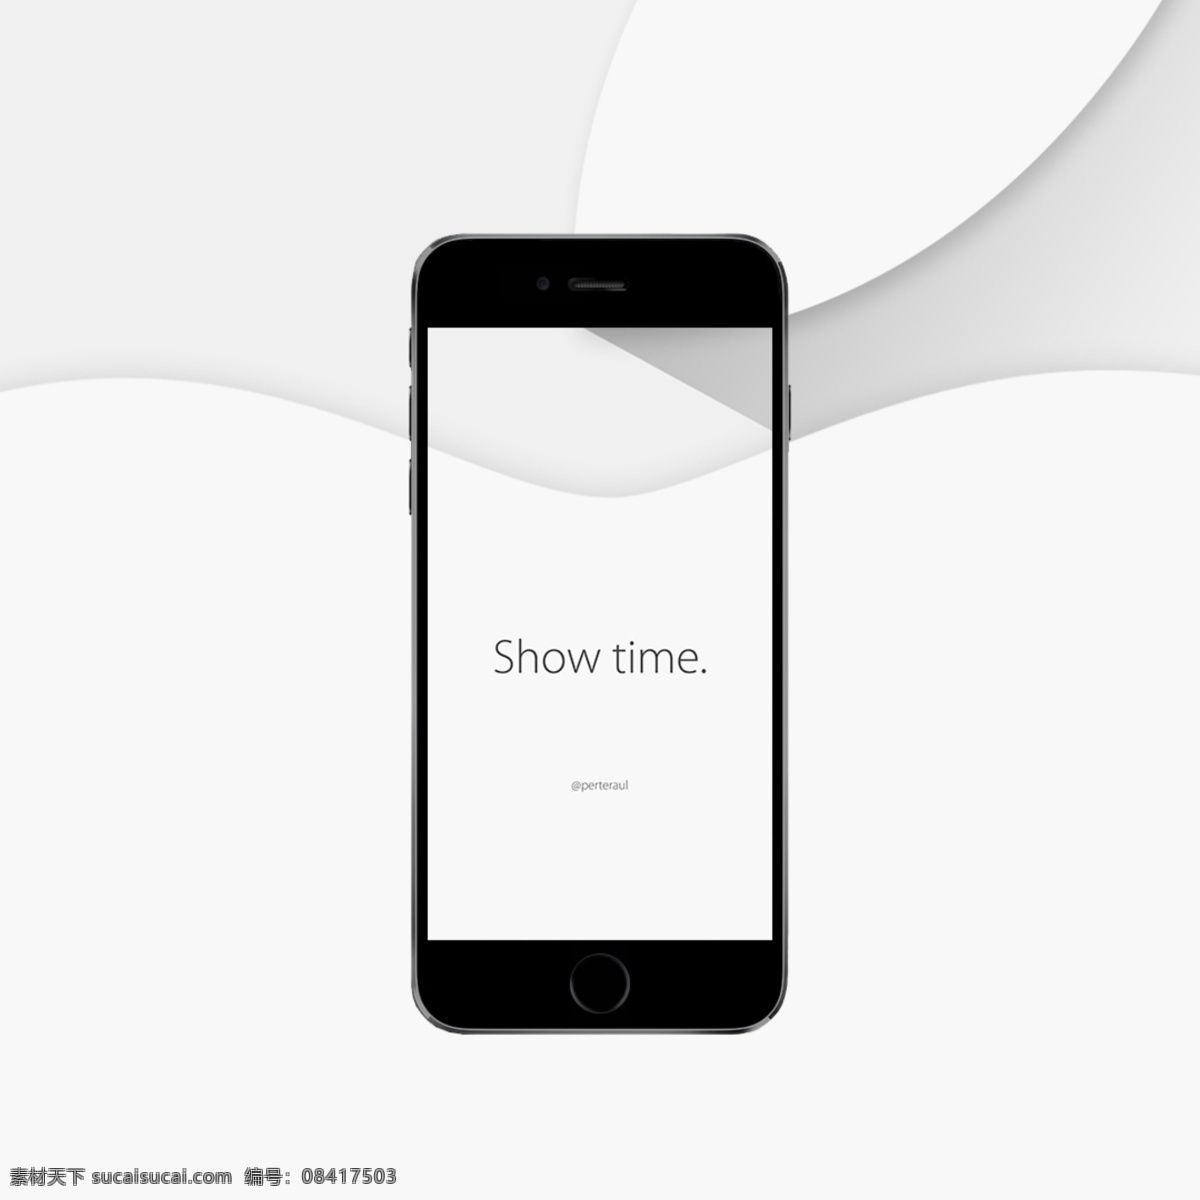 iphone6 苹果6 苹果最新款 苹果logo iphonelogo iphone6s 分层 白色